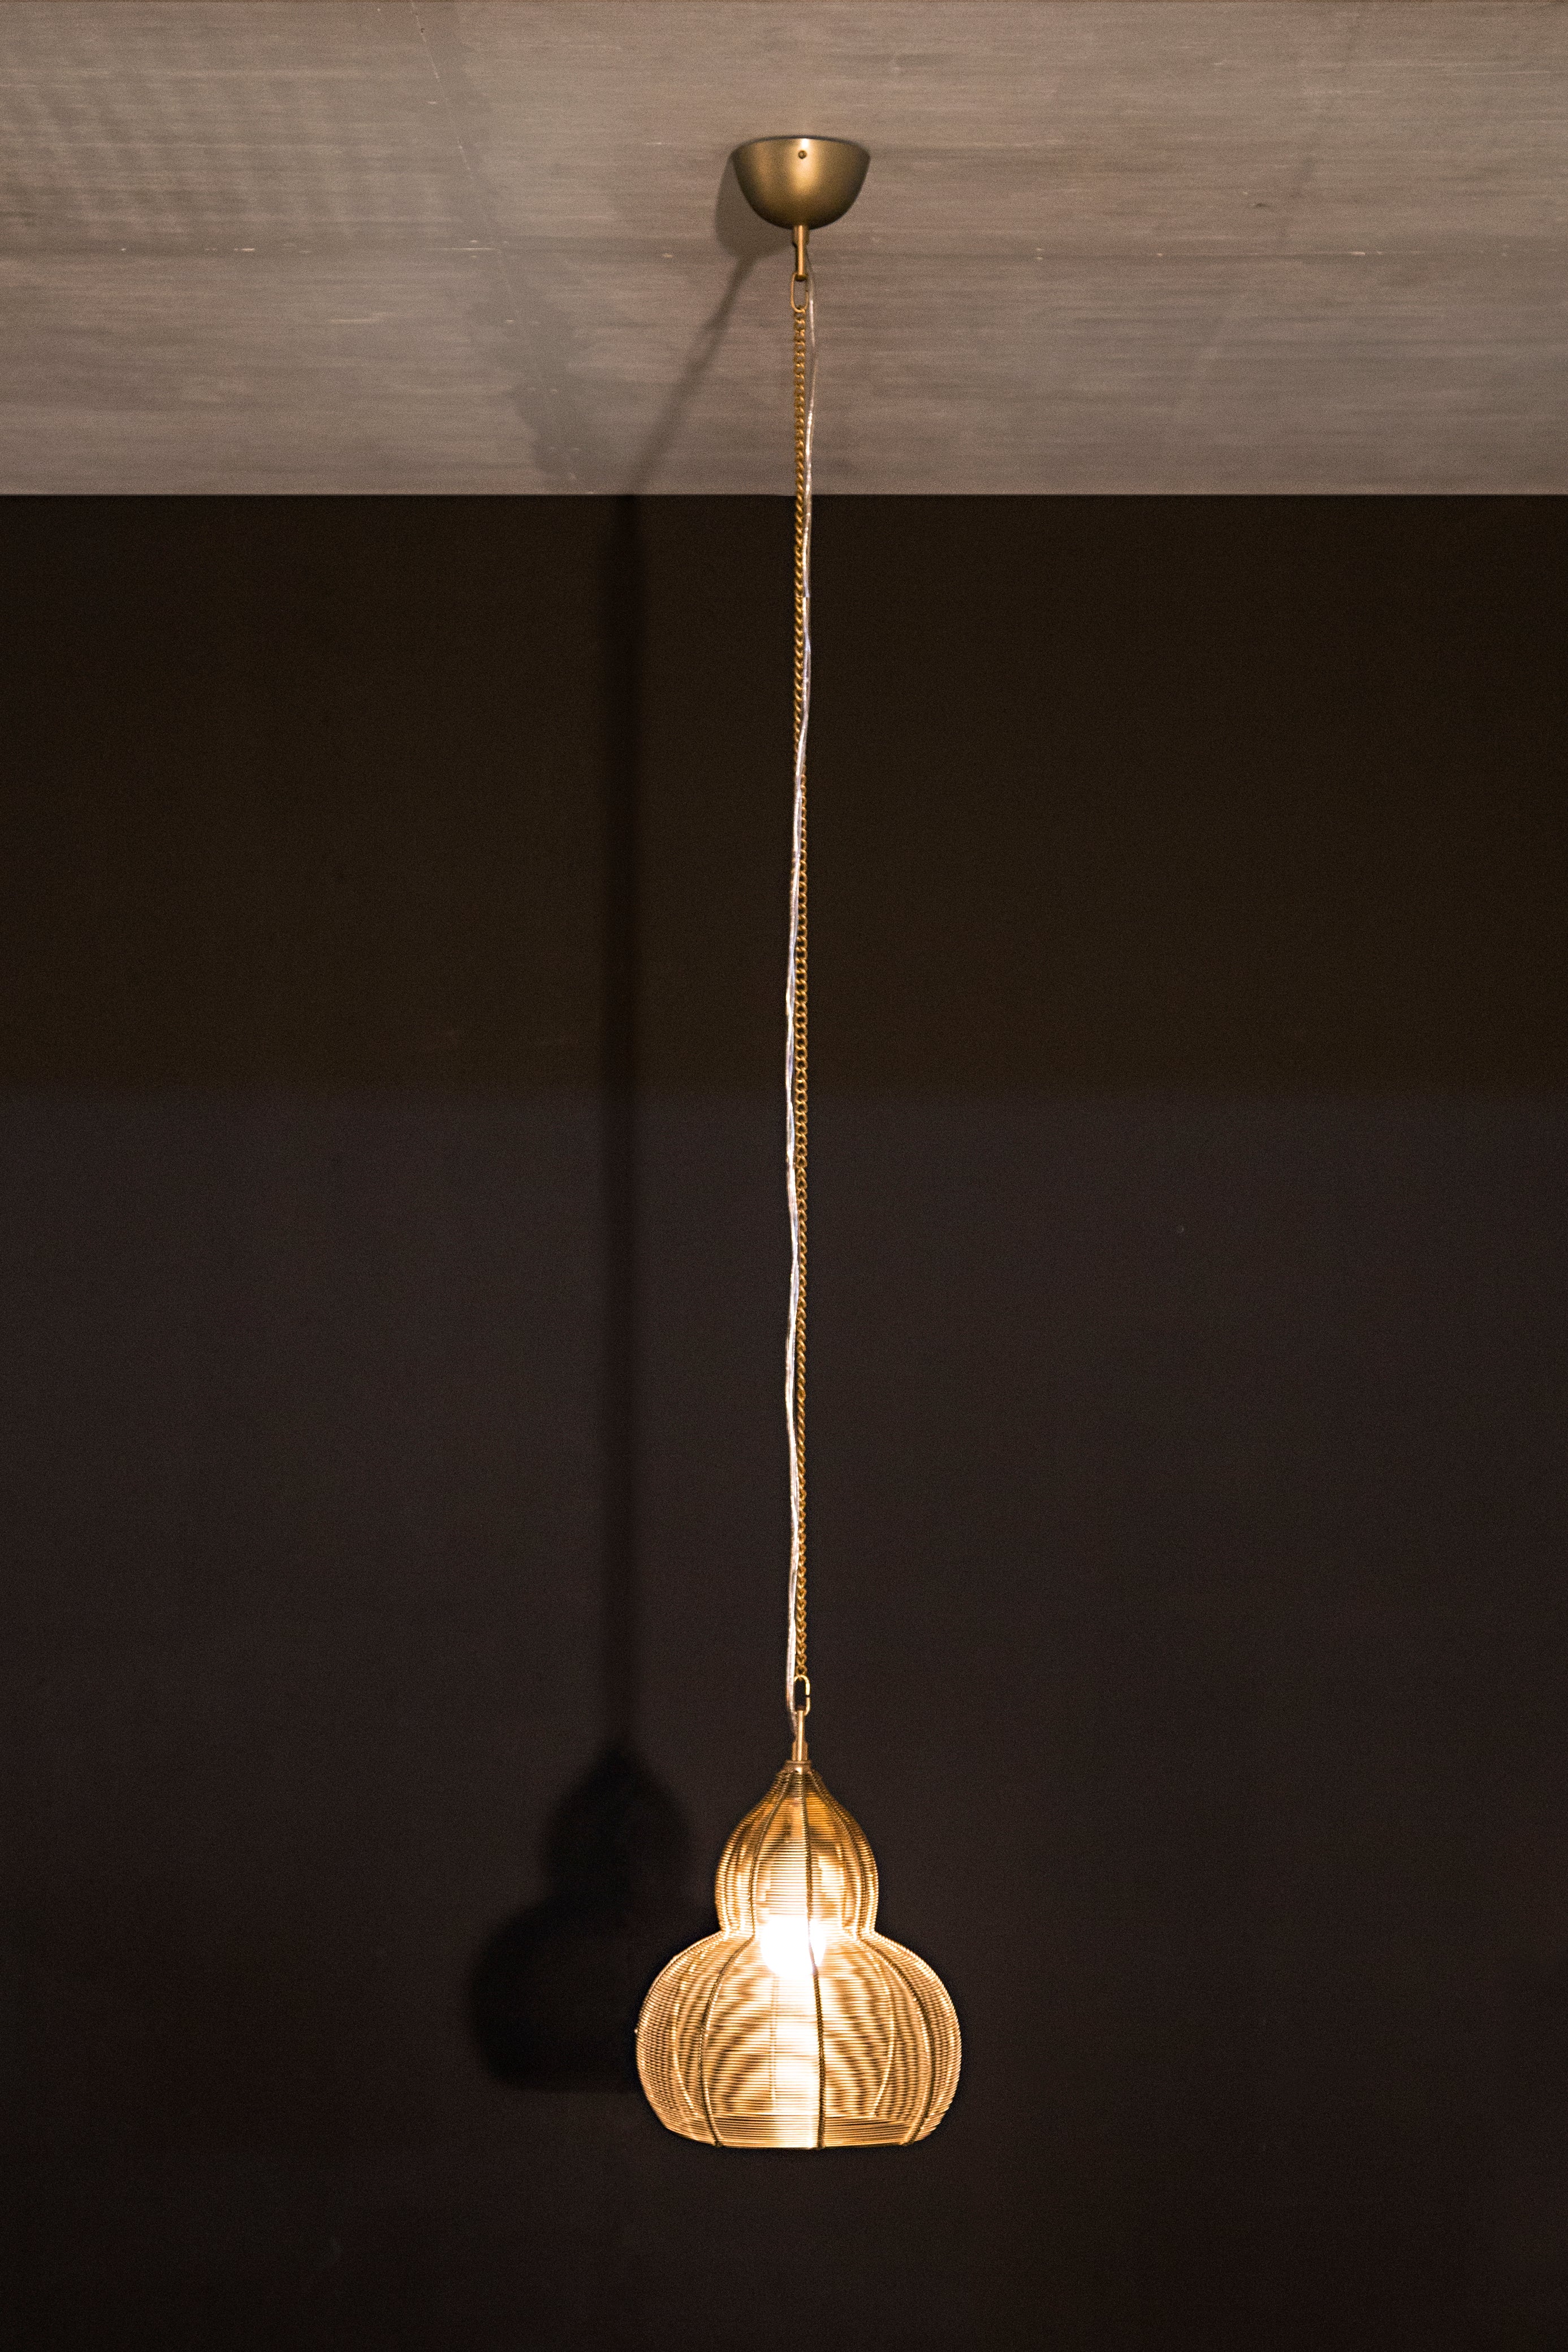 Kainoosh hanging pendant lamp wire lamp lighting, ceiling lamp, decoration, handmade, crafted, vintageKainoosh hanging pendant lamp wire lamp lighting, ceiling lamp, decoration, handmade, crafted, vintage